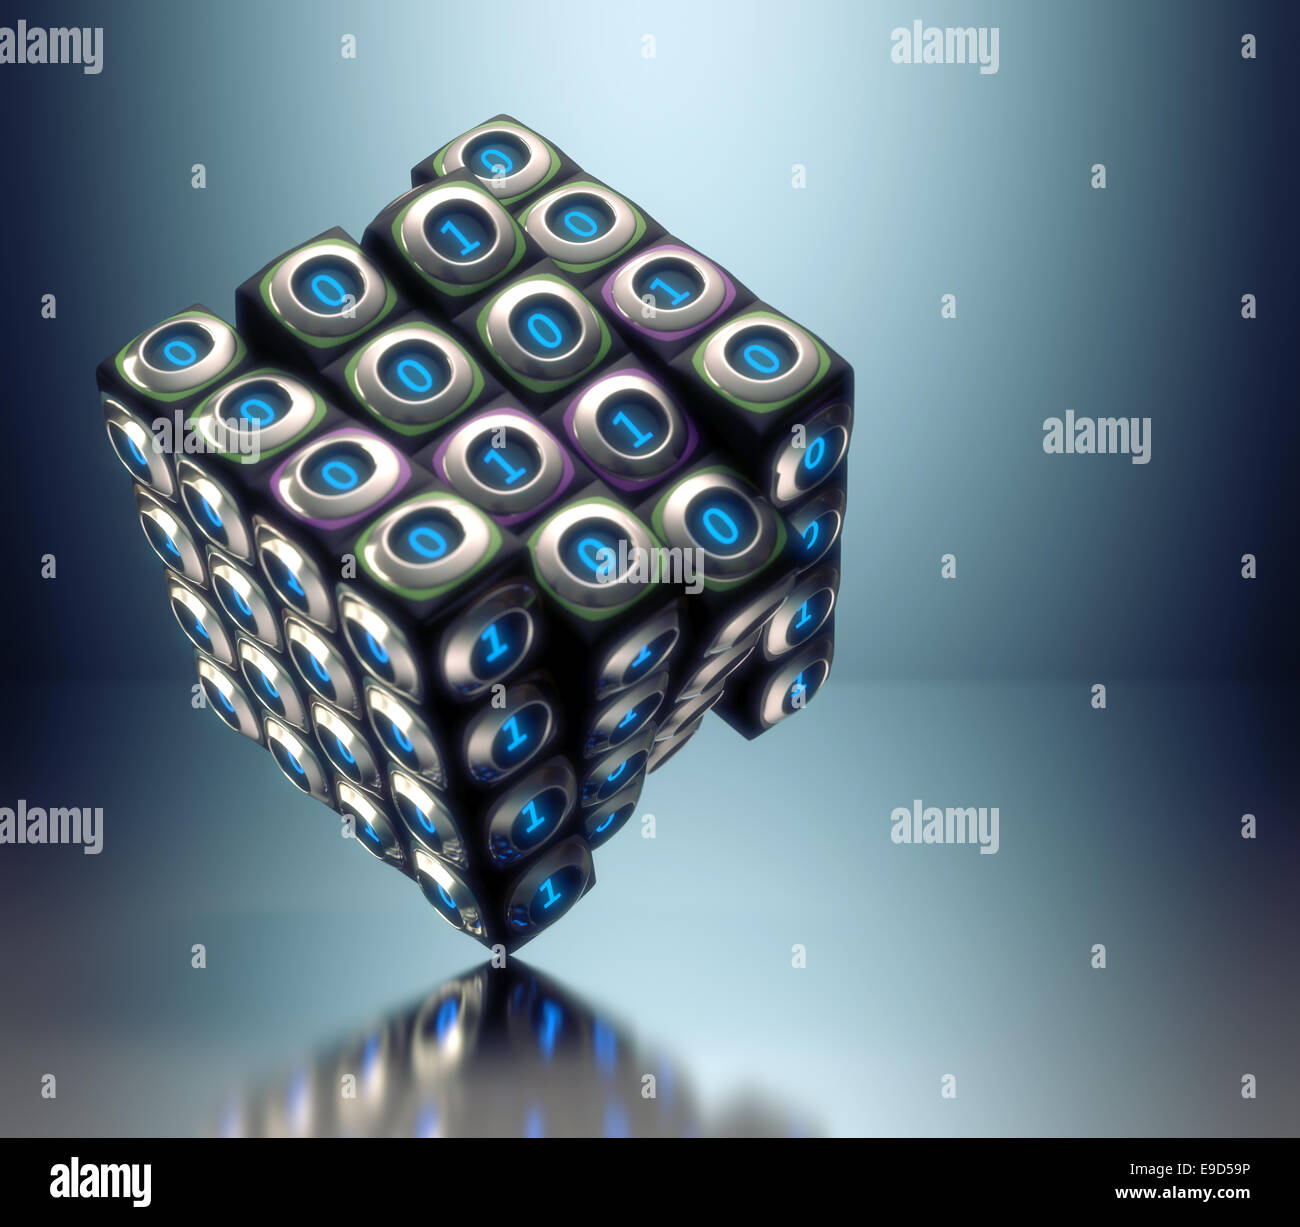 Binäre Cube-Konzept der digitalen Technologie. Clipping-Pfad enthalten. Stockfoto